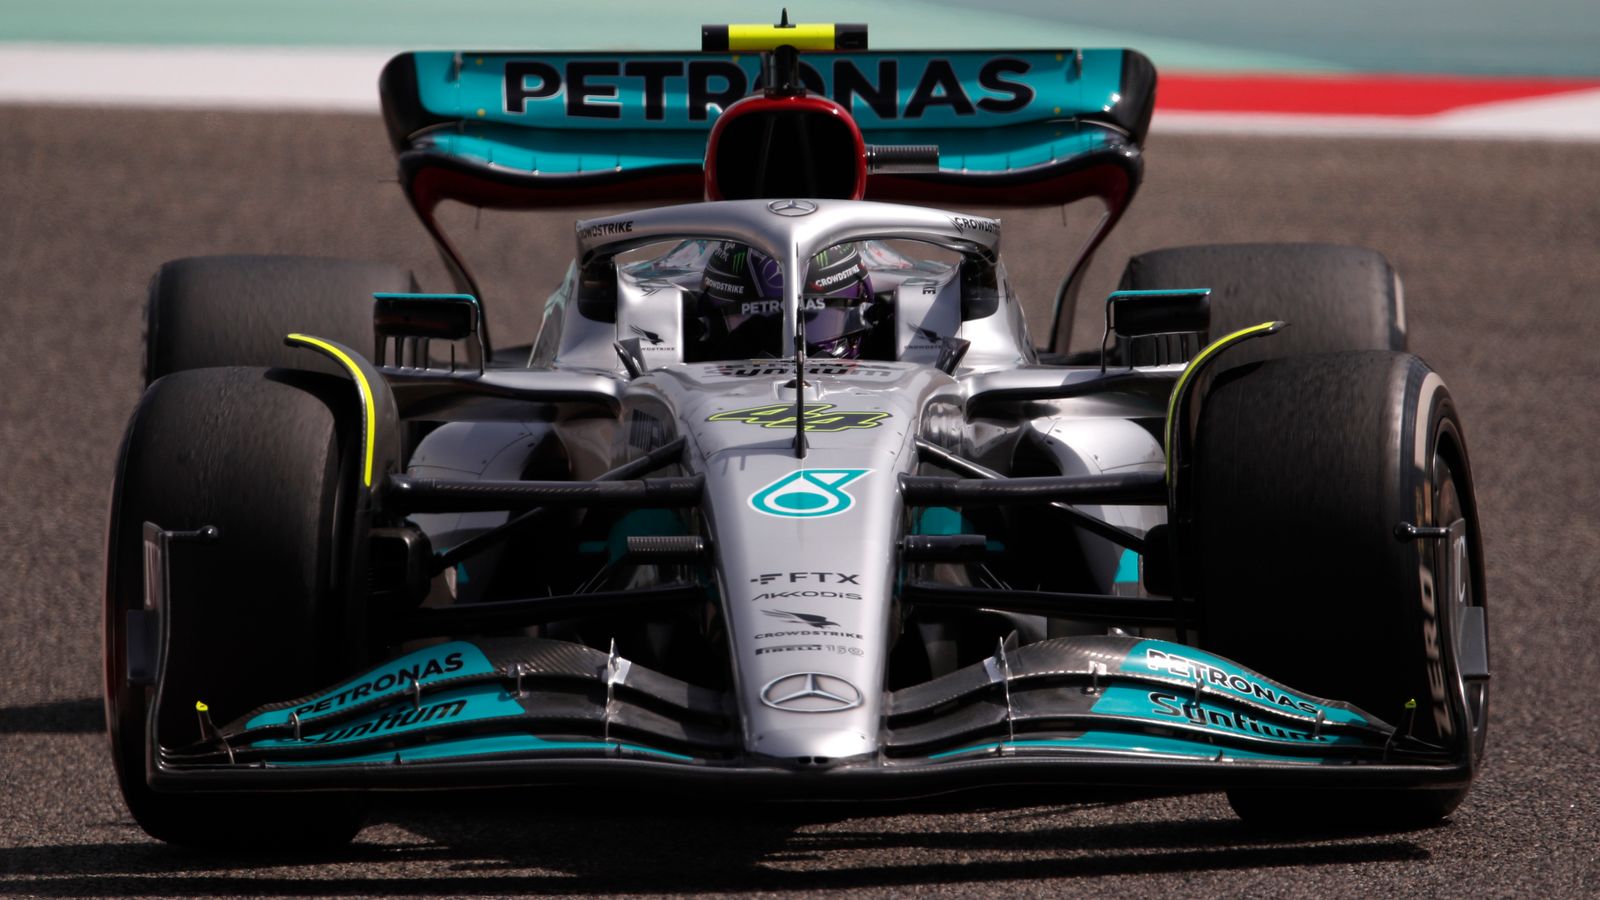 Pengujian F1: Mercedes menarik perhatian di Bahrain dengan desain radikal tanpa sidepod pada mobil yang dibenahi